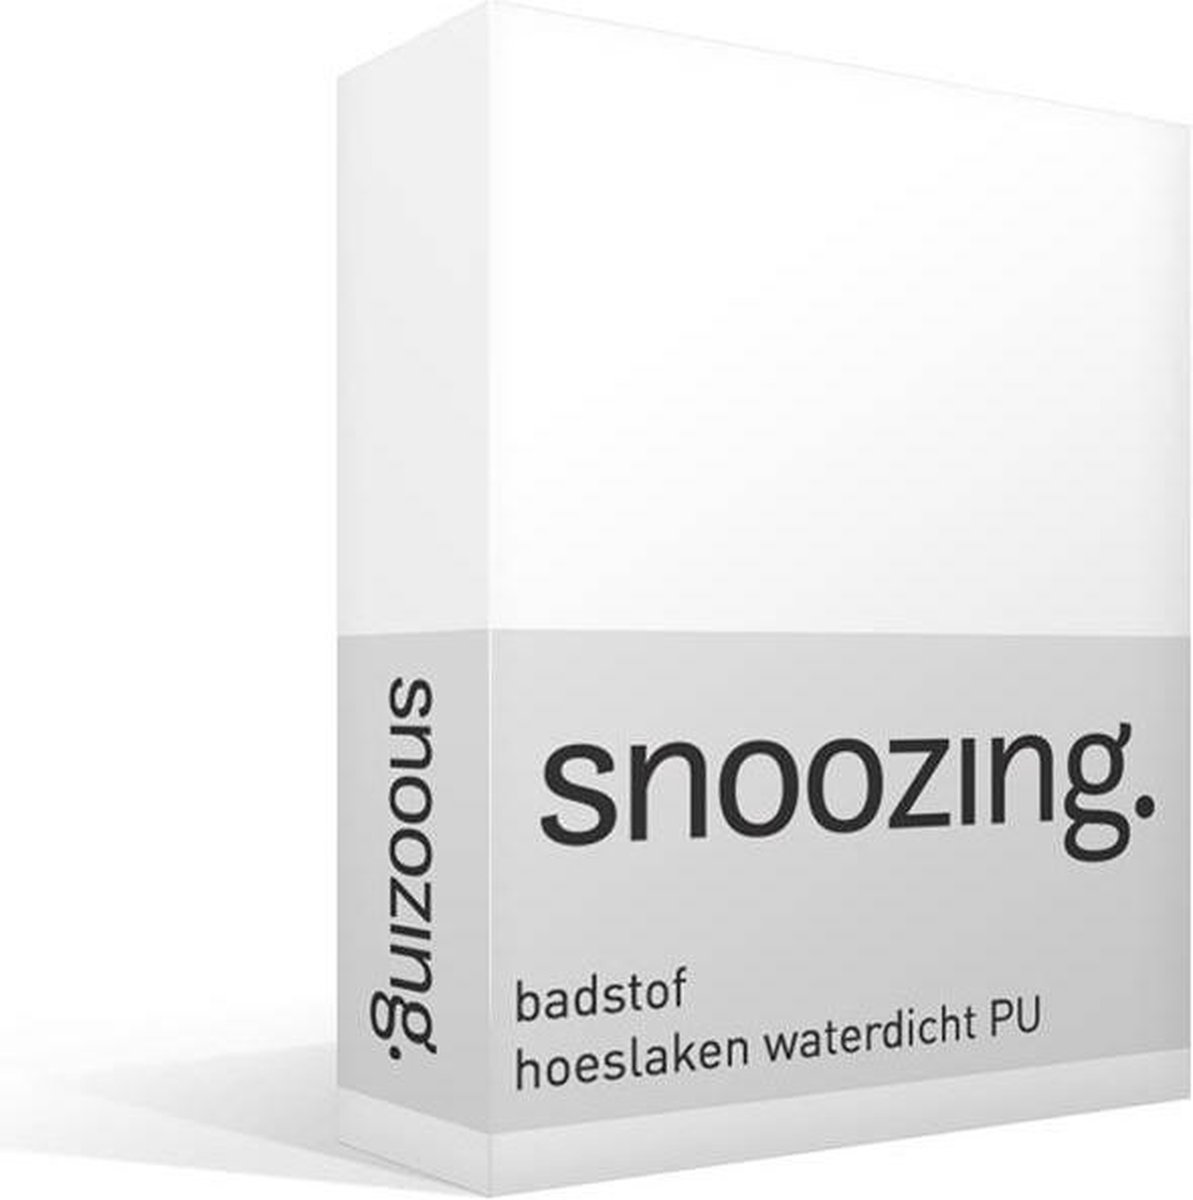 Snoozing Badstof Waterdicht Pu Hoeslaken - 80% Katoen - 20% Polyester - 1-persoons (80x220 Cm) - - Wit